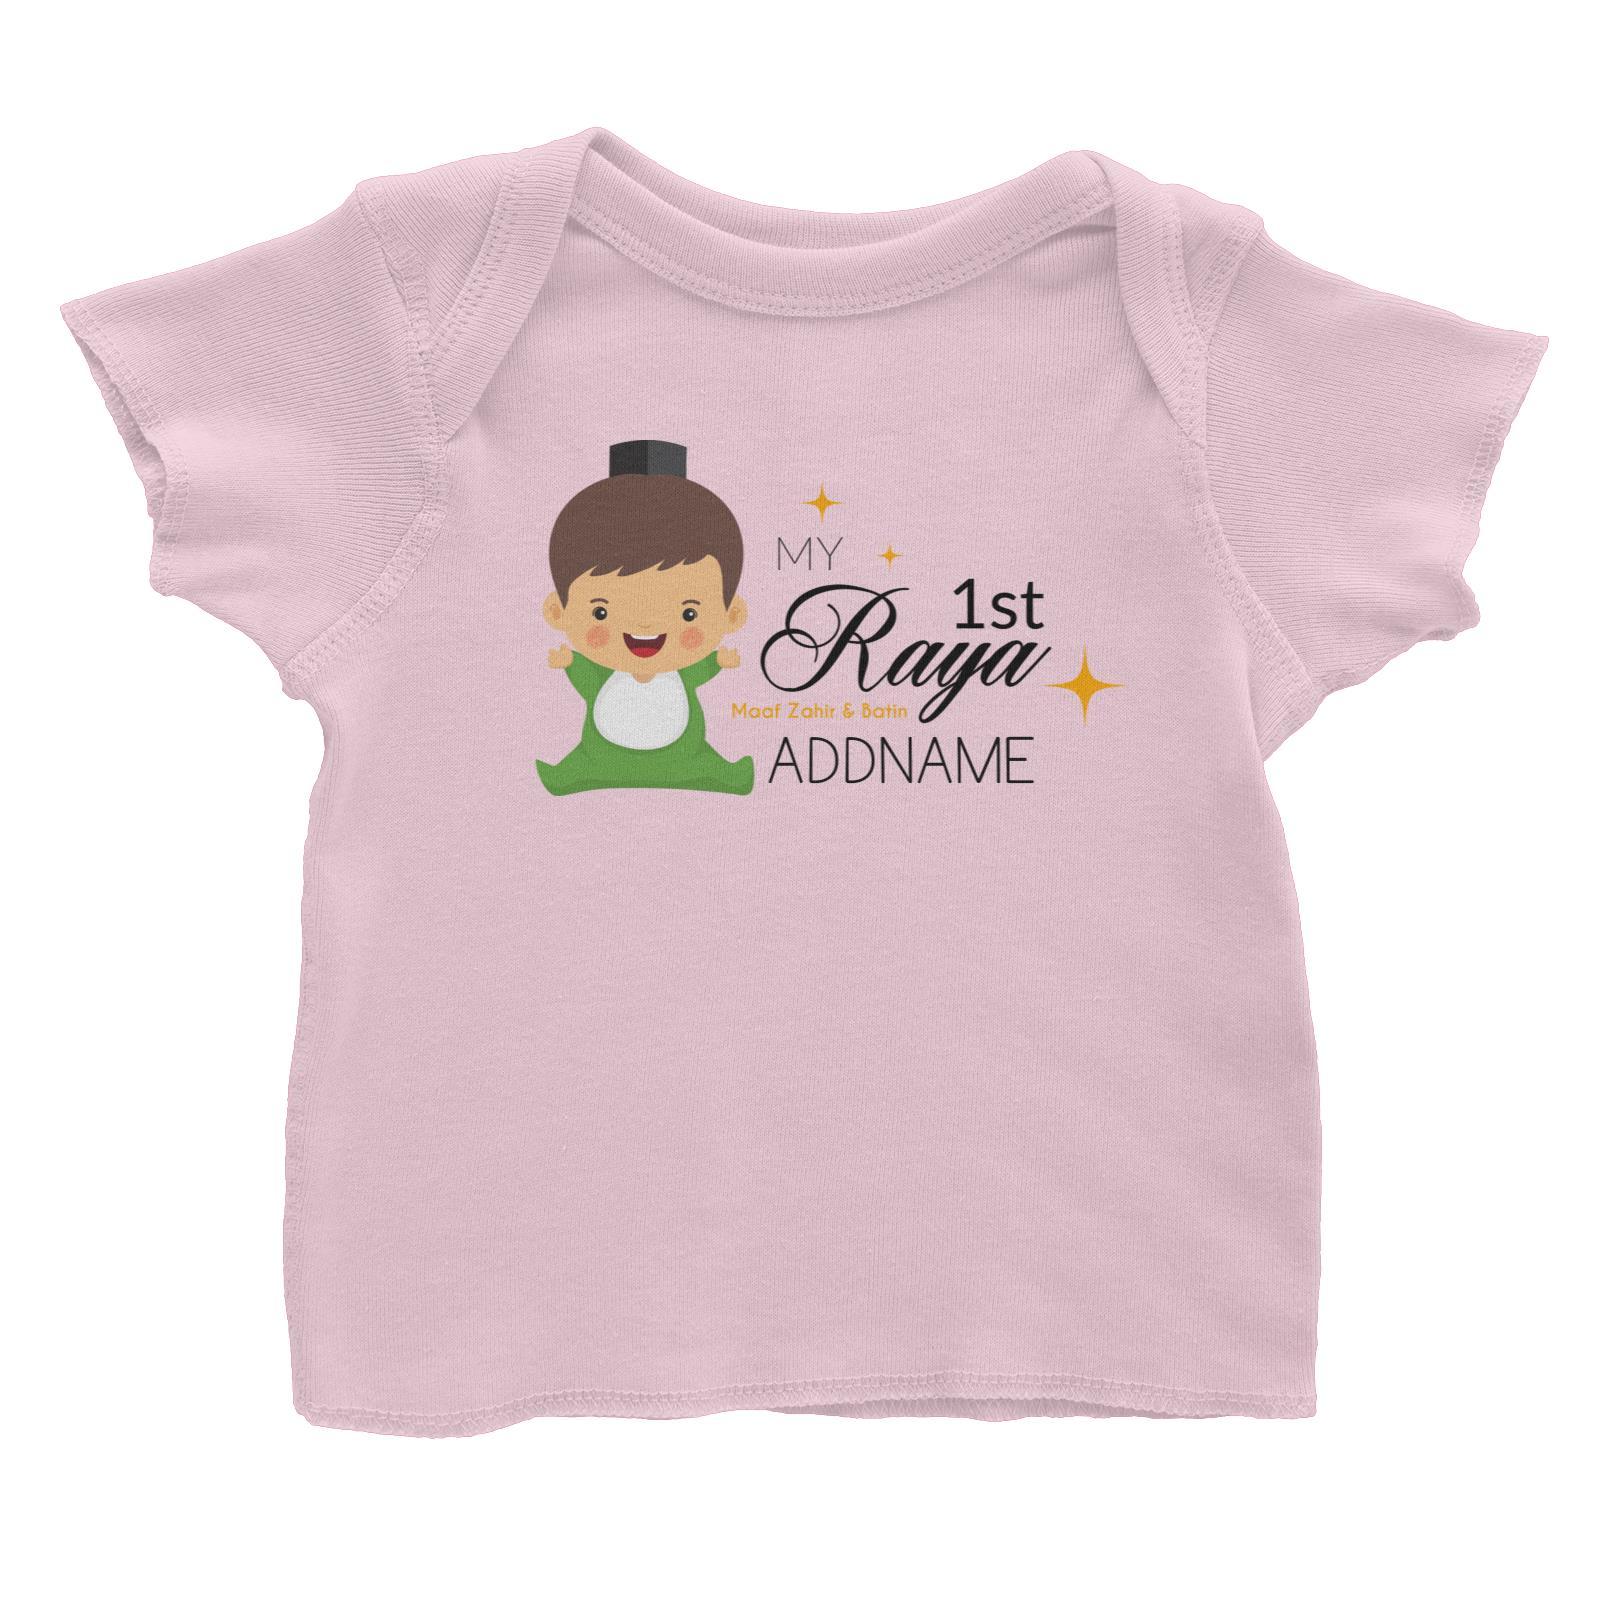 My 1st Raya Baby Boy Baby T-Shirt  Personalizable Designs Sweet Character